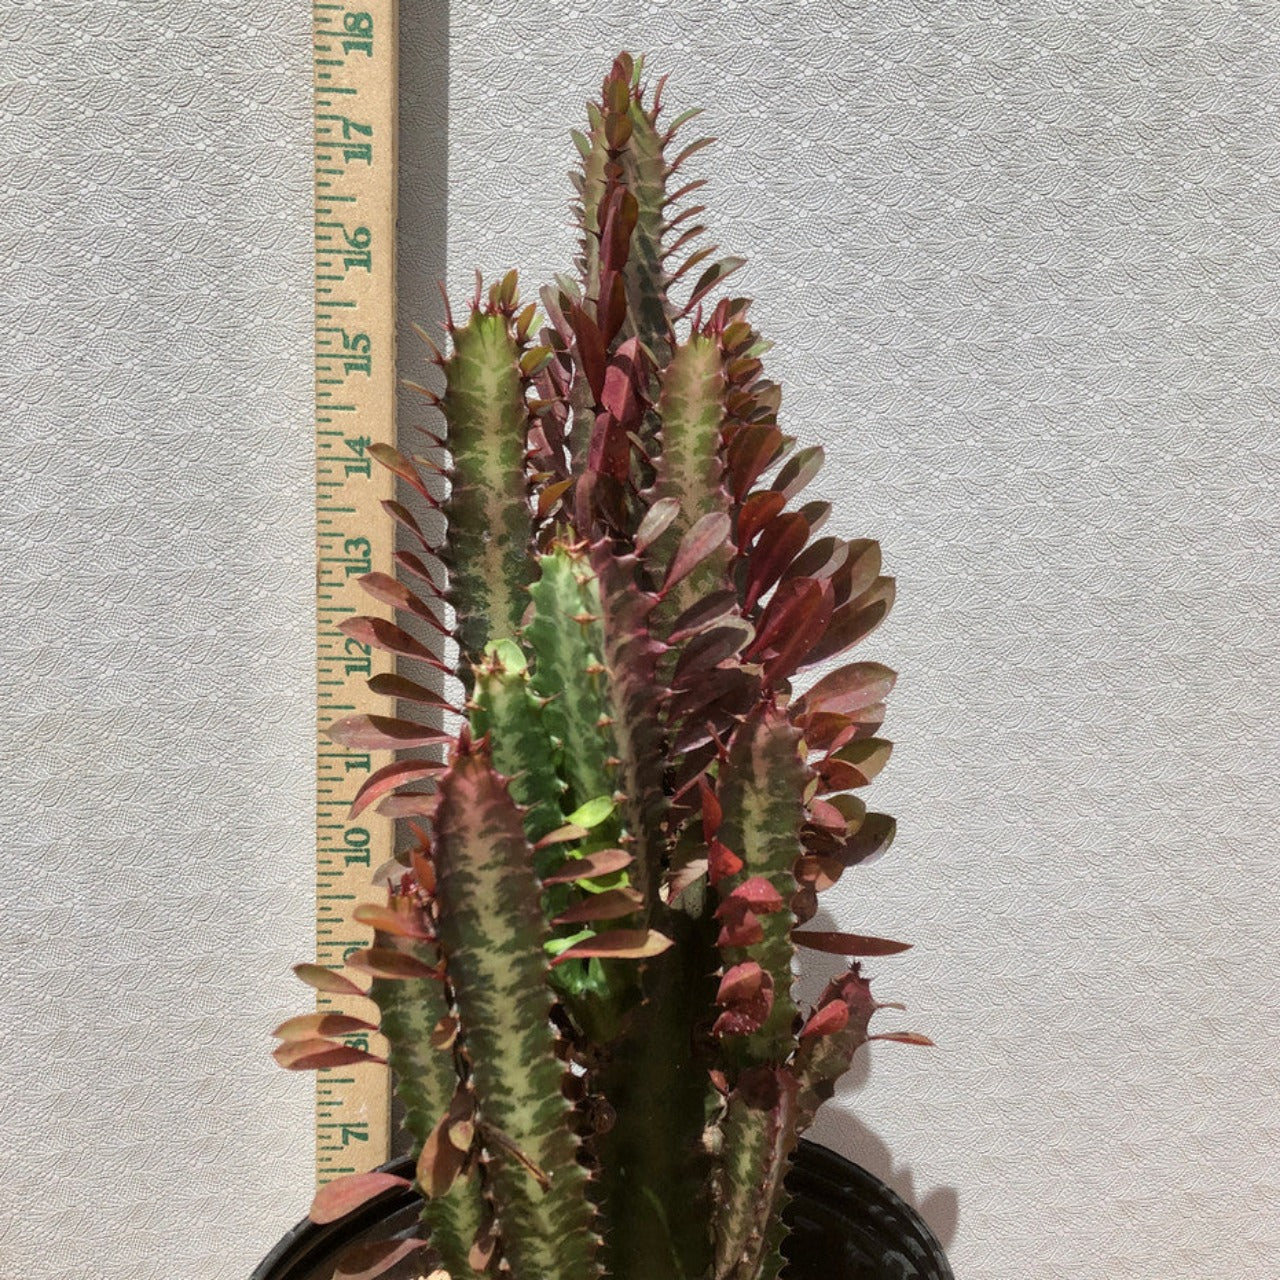 Euphorbia Trigona Rubra with a measuring stick